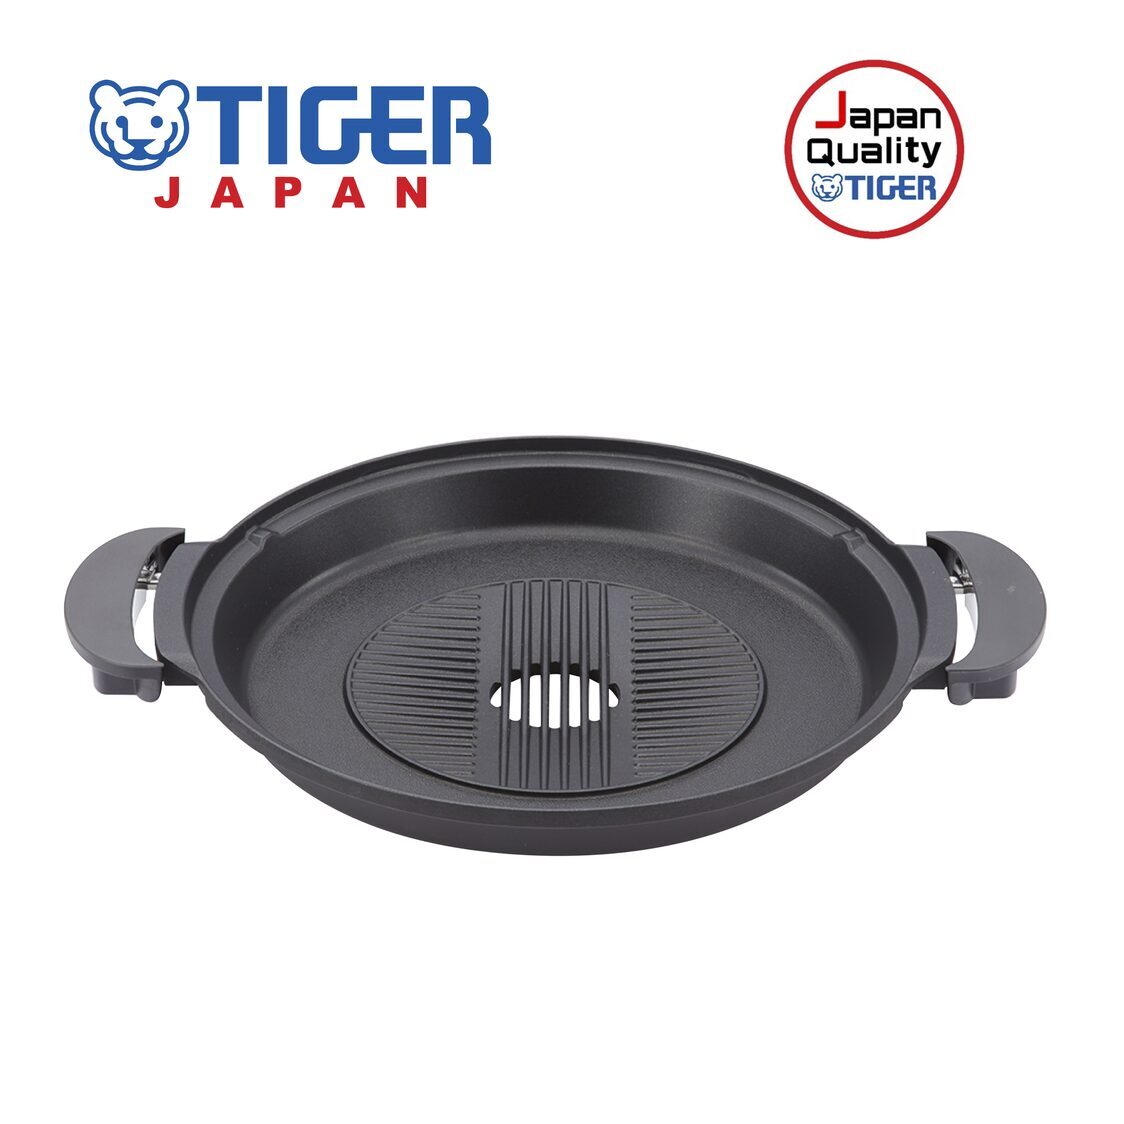 Tiger Grill Pan for CQD-B10S CQD-N01S